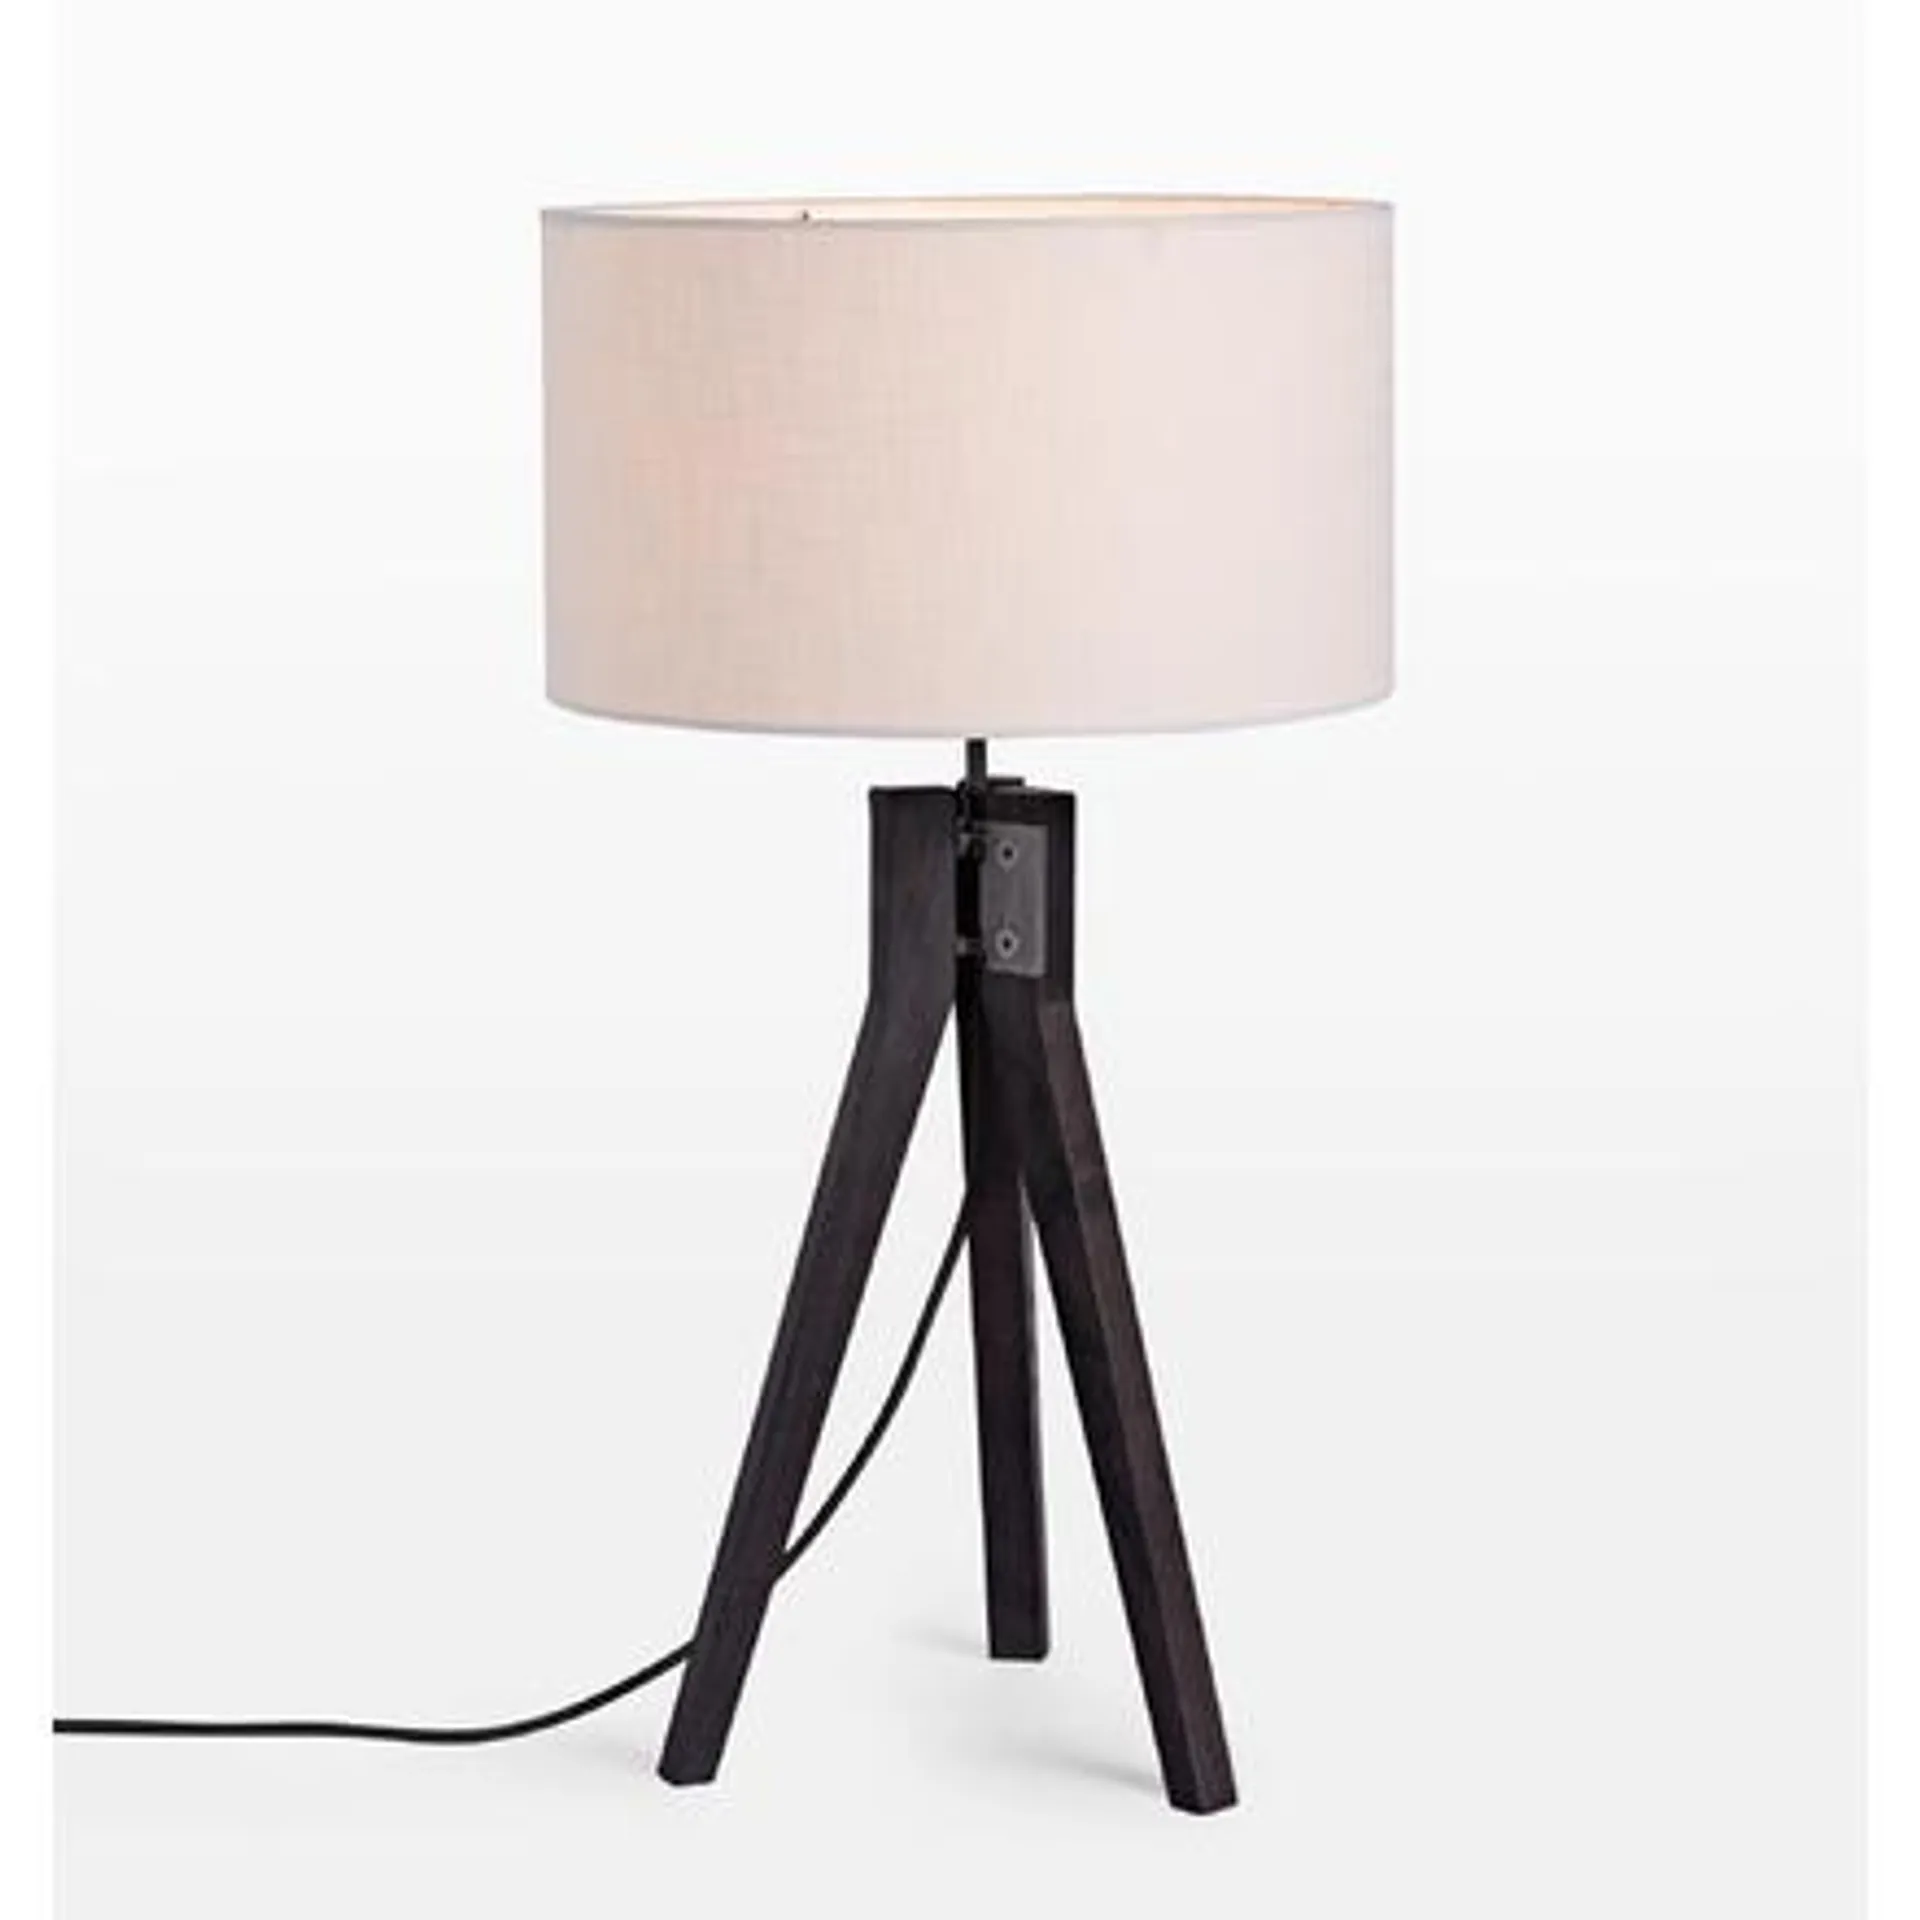 FOLK Tripod Table Lamp